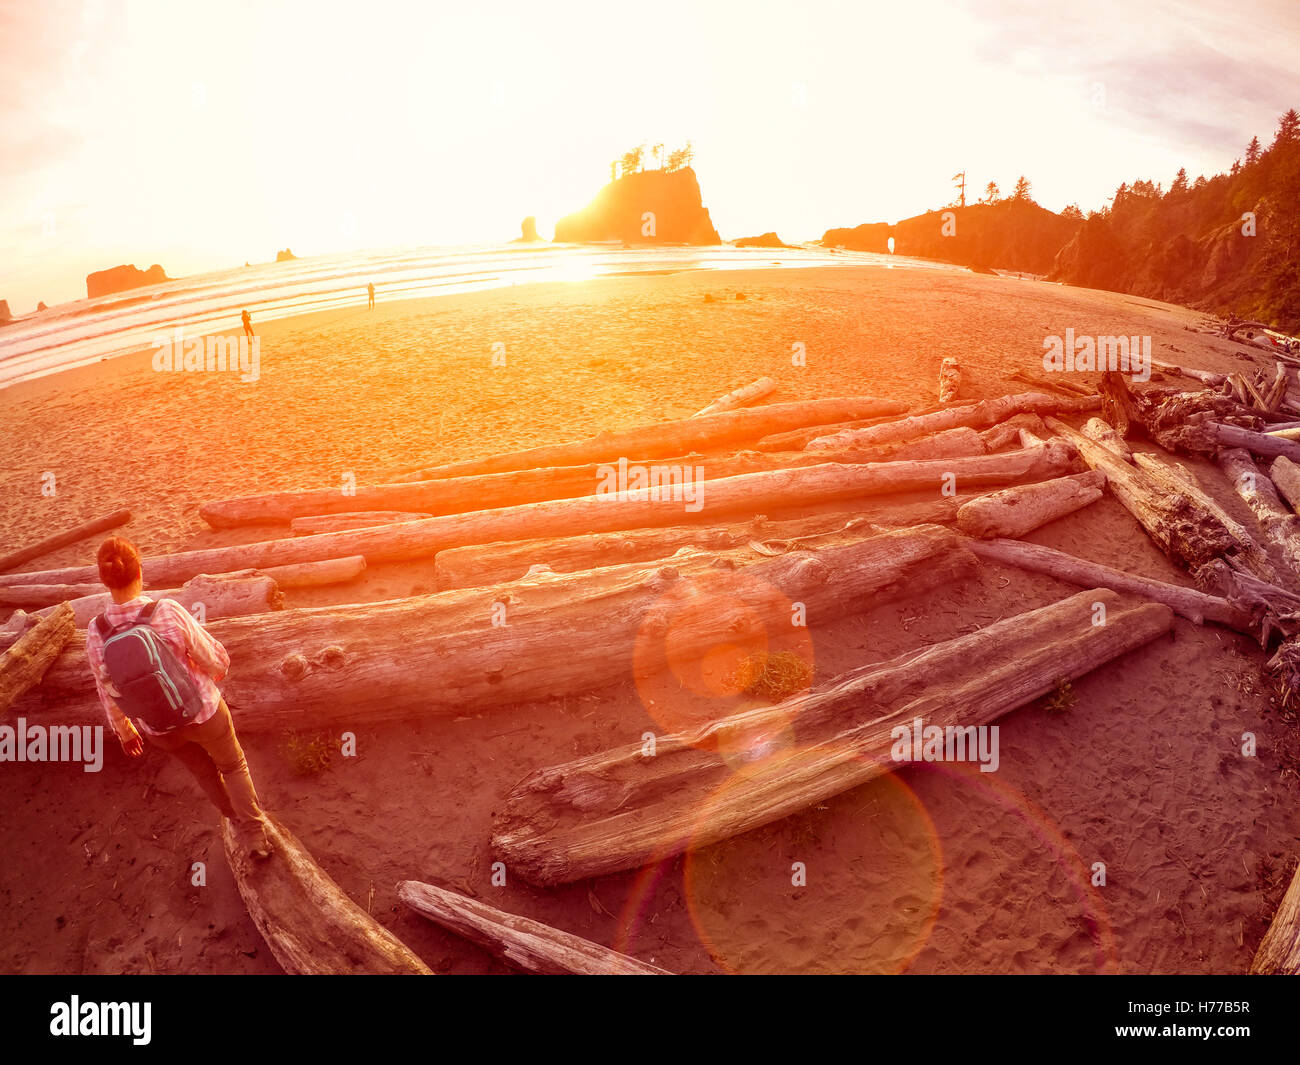 Woman standing on a log on beach, La plush, Washington, United States Stock Photo